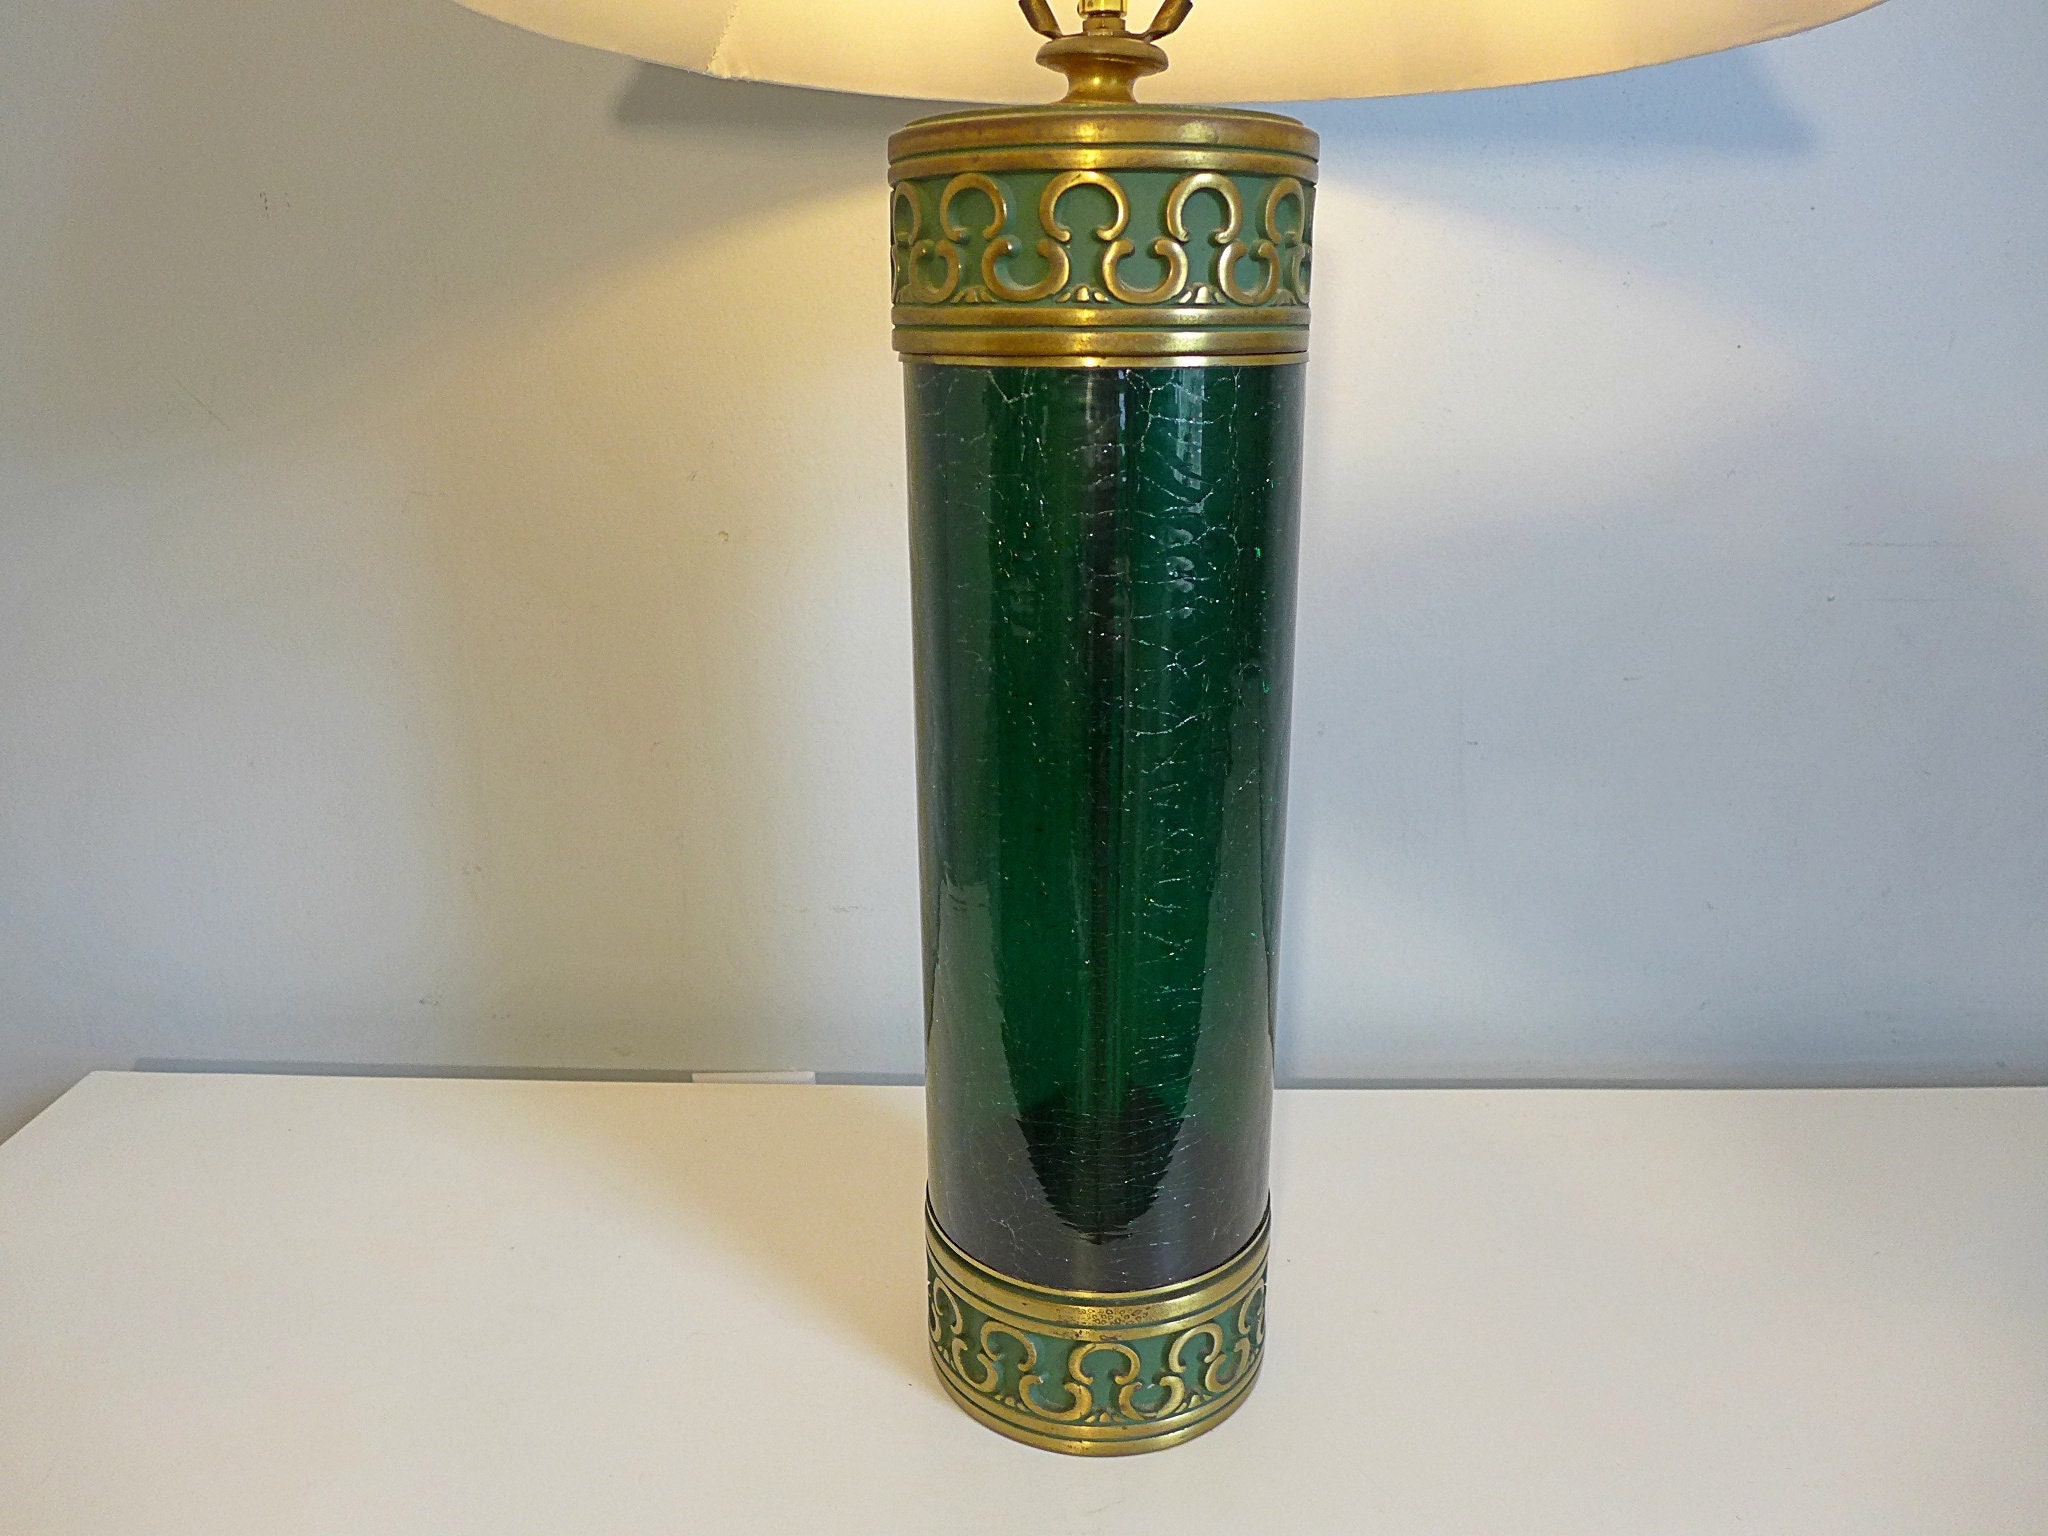 Mini Tortoise Glass Cordless Lamp - Antique Brass